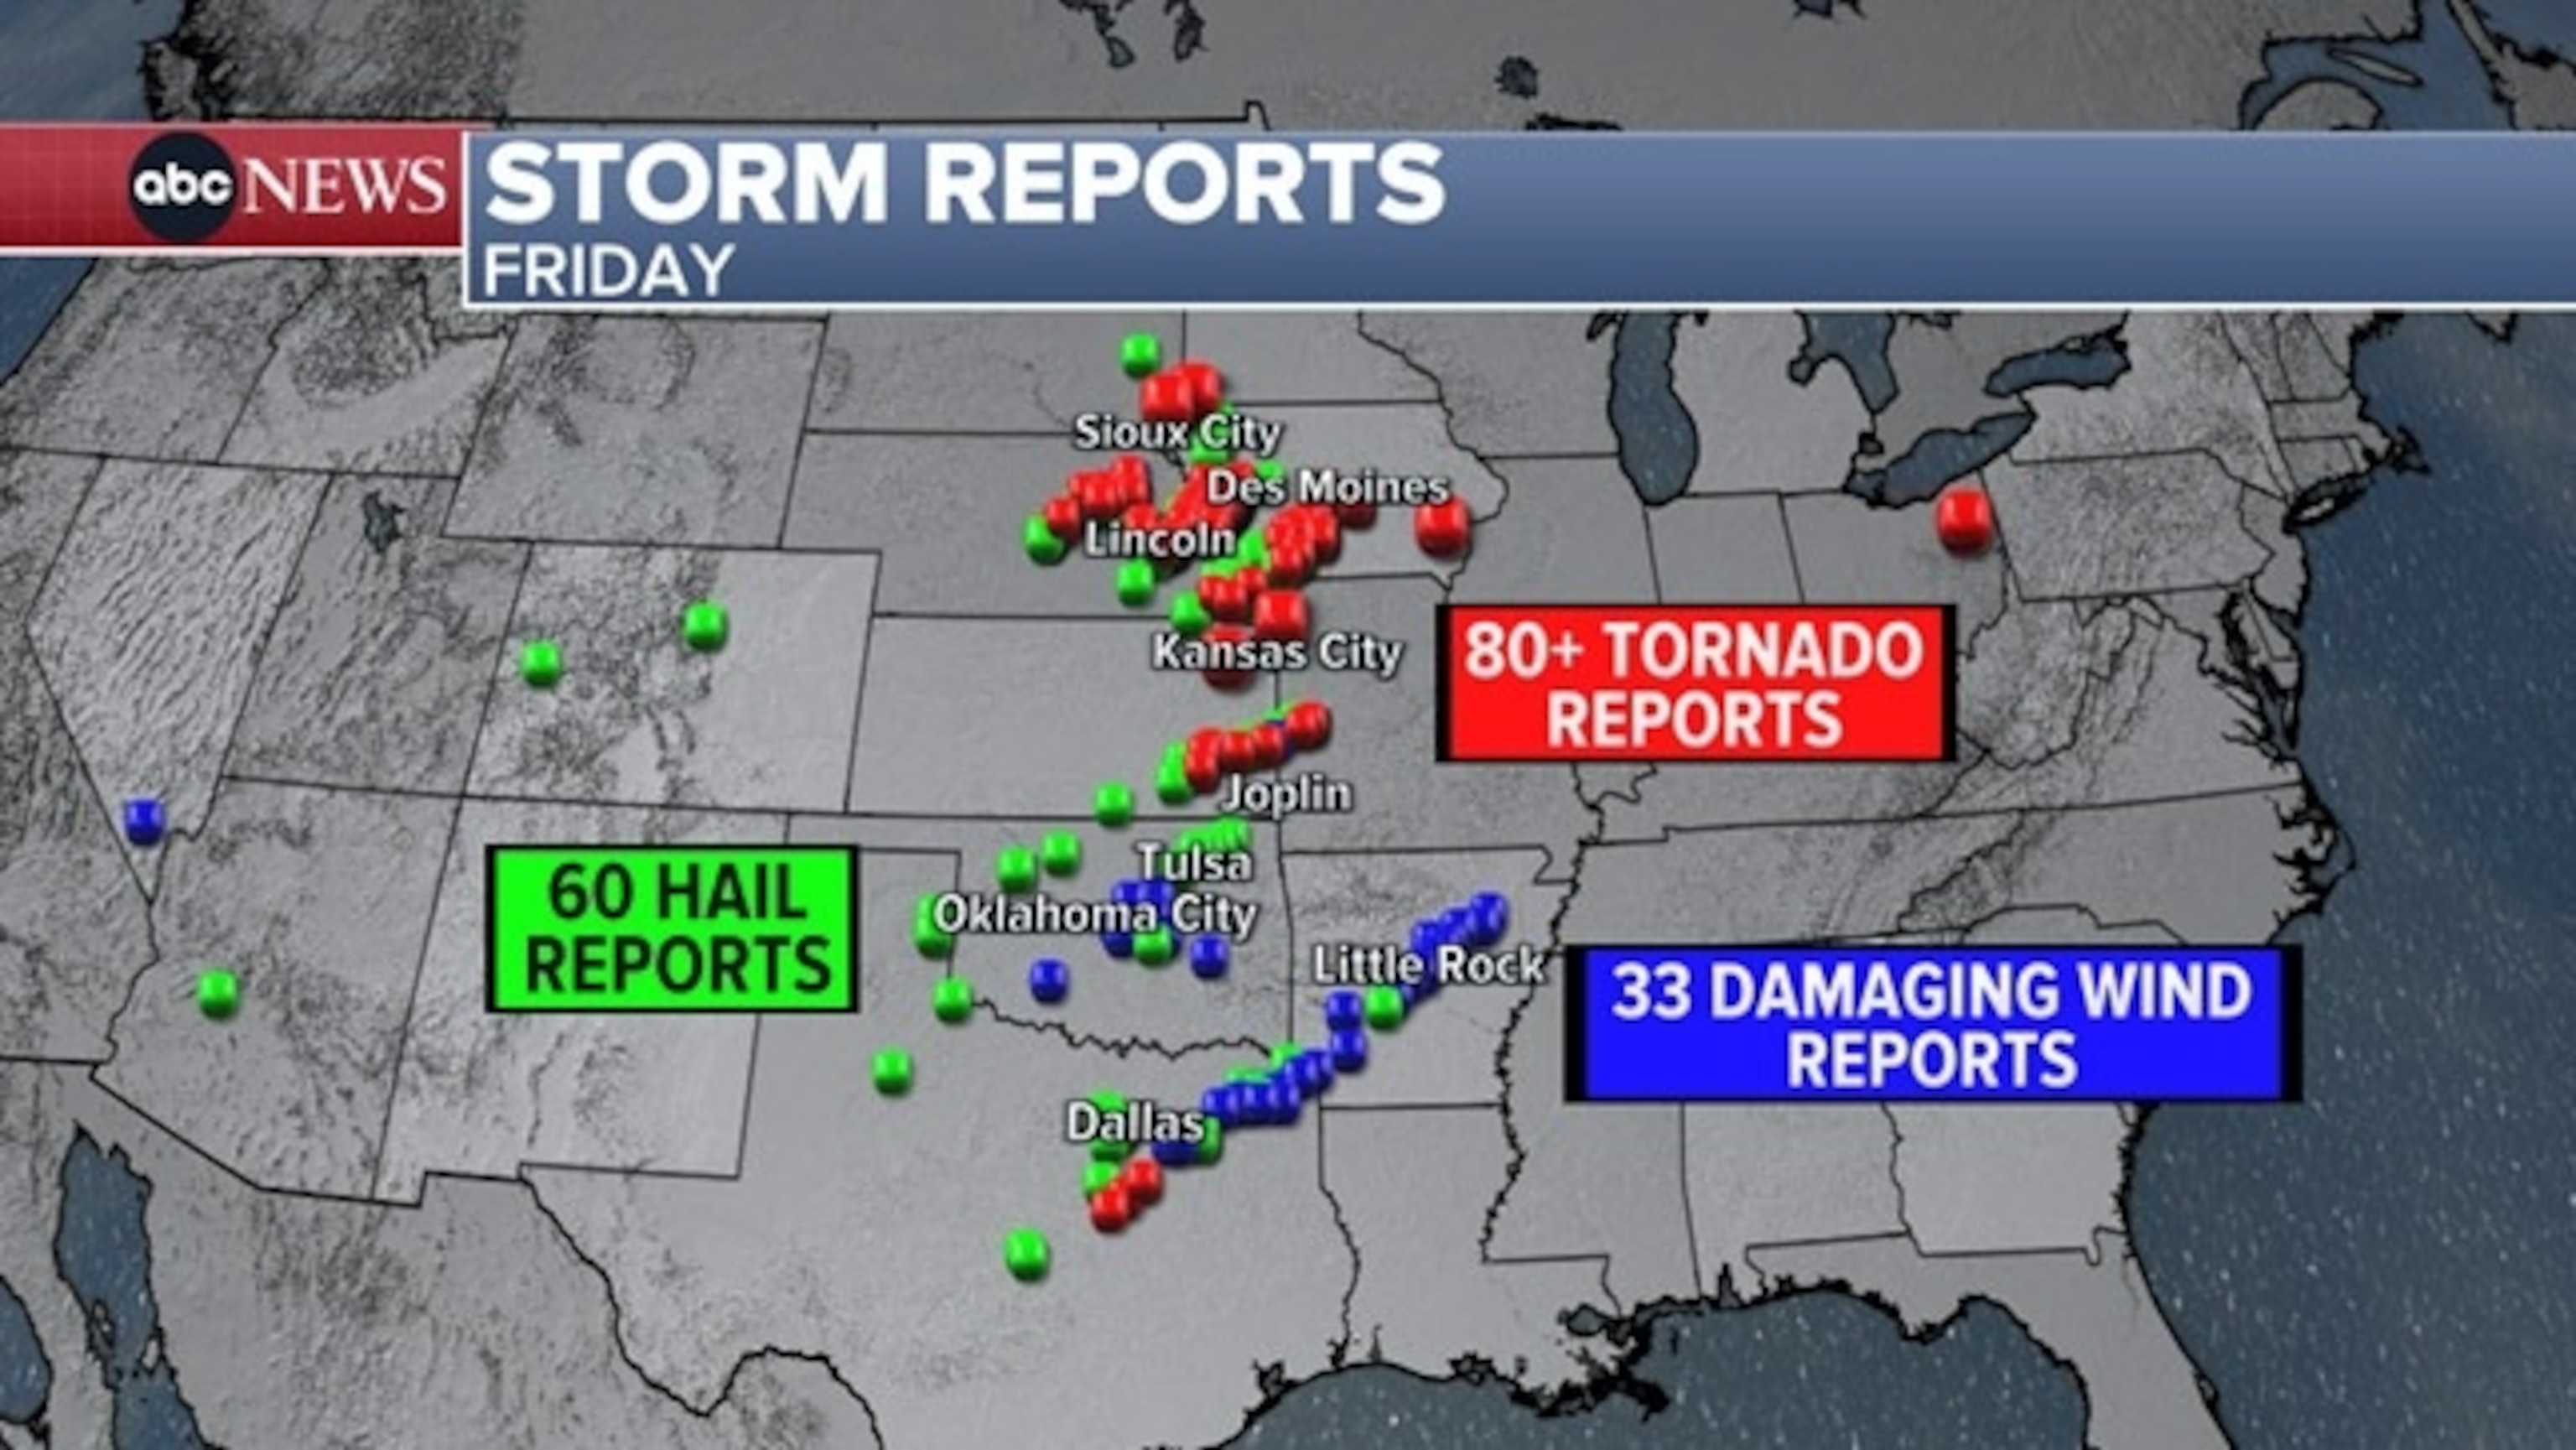 PHOTO: new storm report graphic